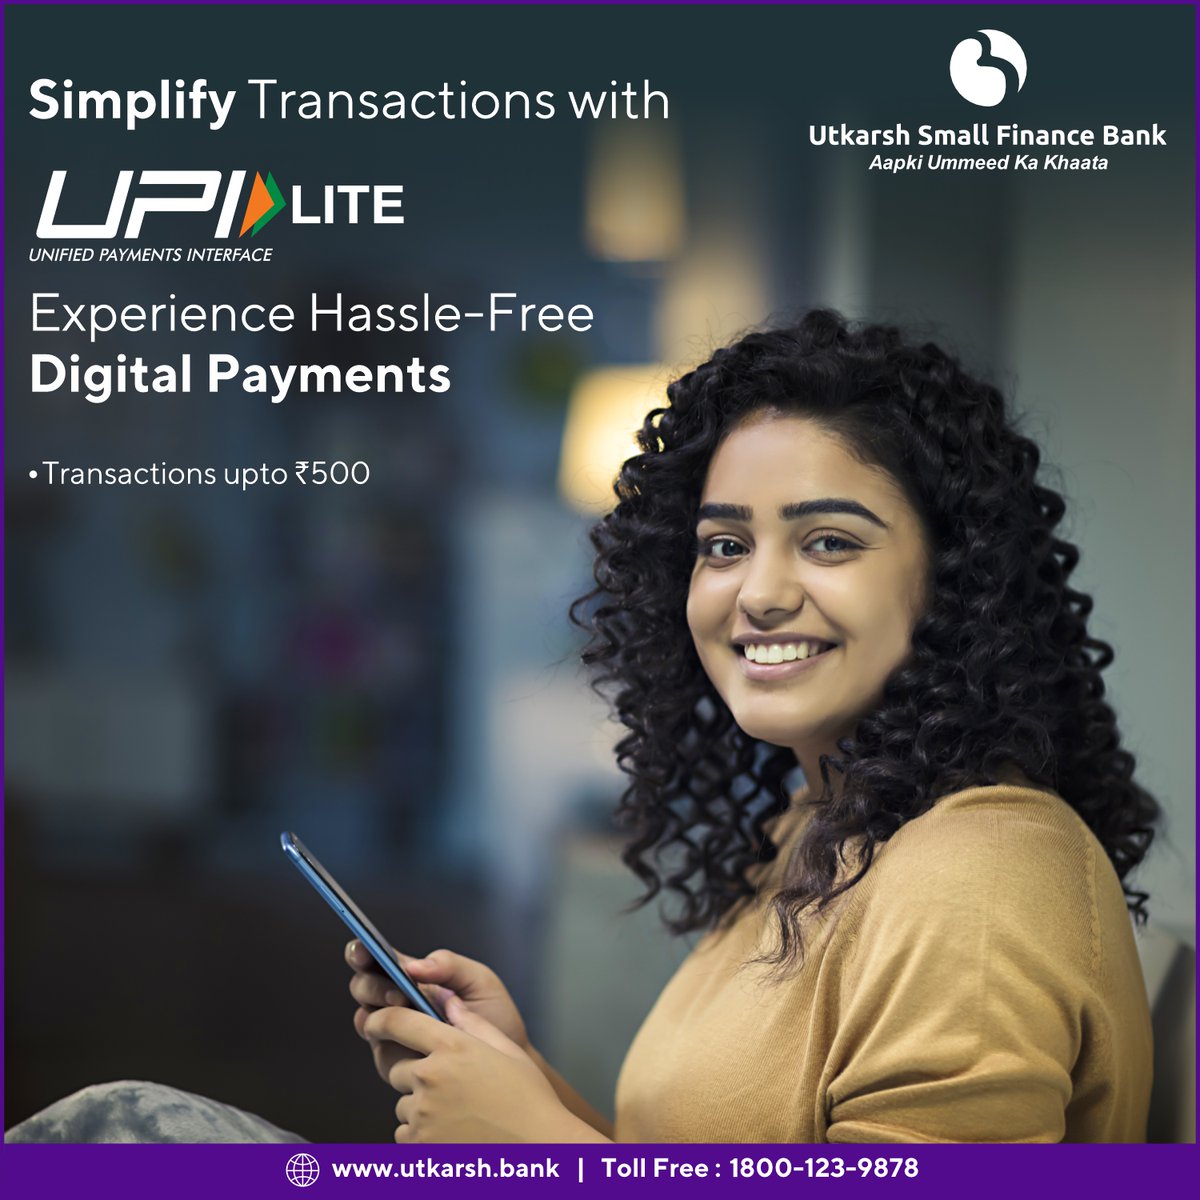 Keep it simple, keep it lite! UPI Lite - the smarter way to breeze through your transactions effortlessly. #UPILite #BFSI #Utkarshsmallfinancebank